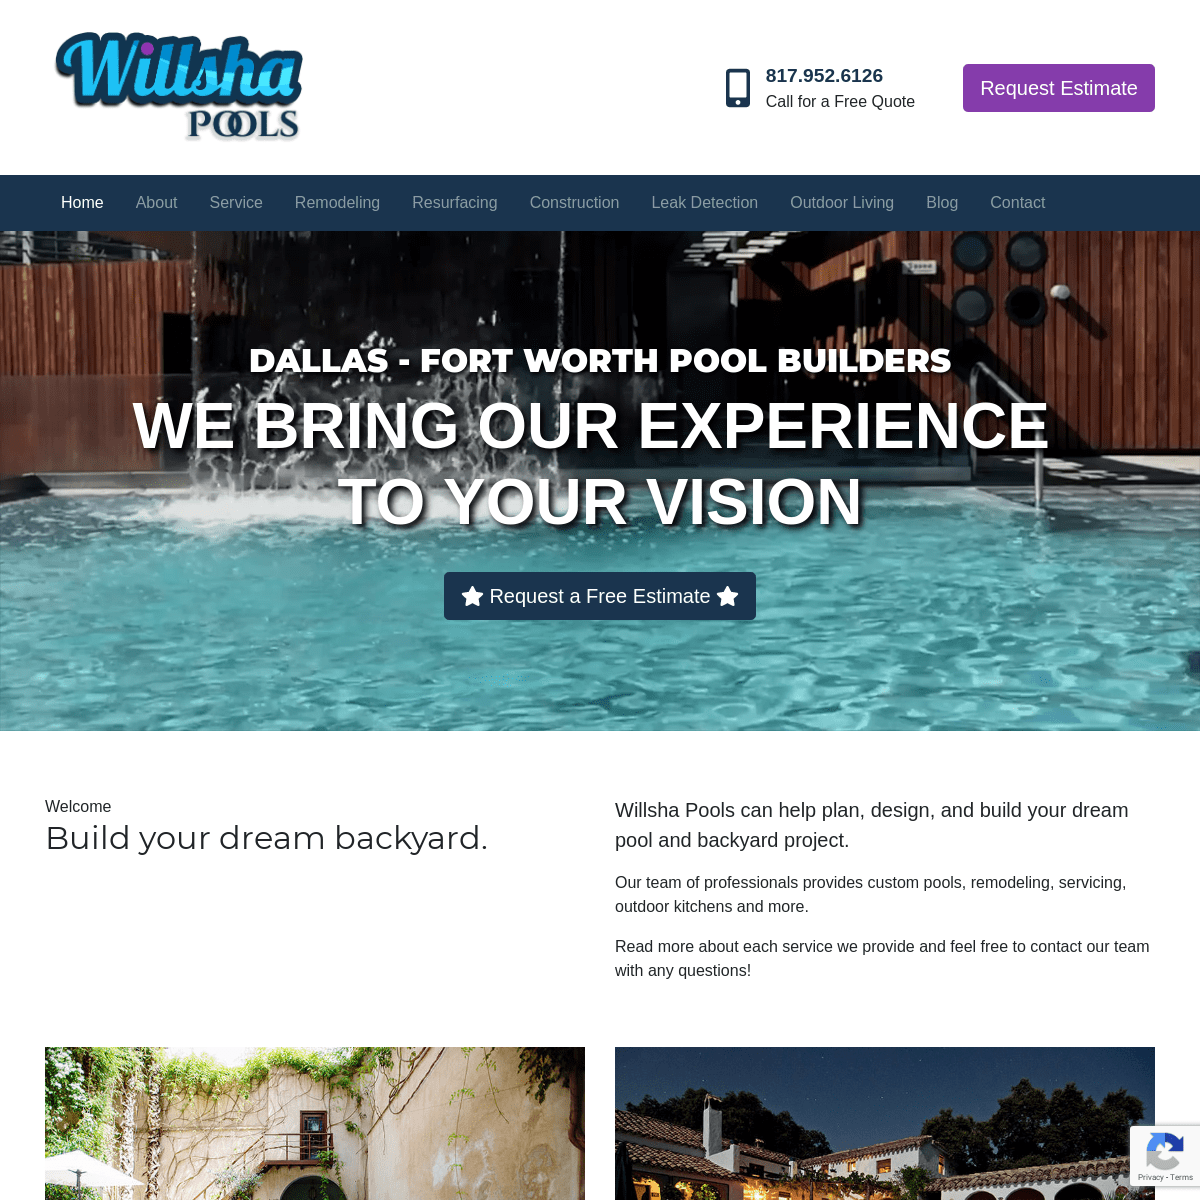 Dallas-Fort Worth Pool Builders & Outdoor Living Company | Willsha Pools